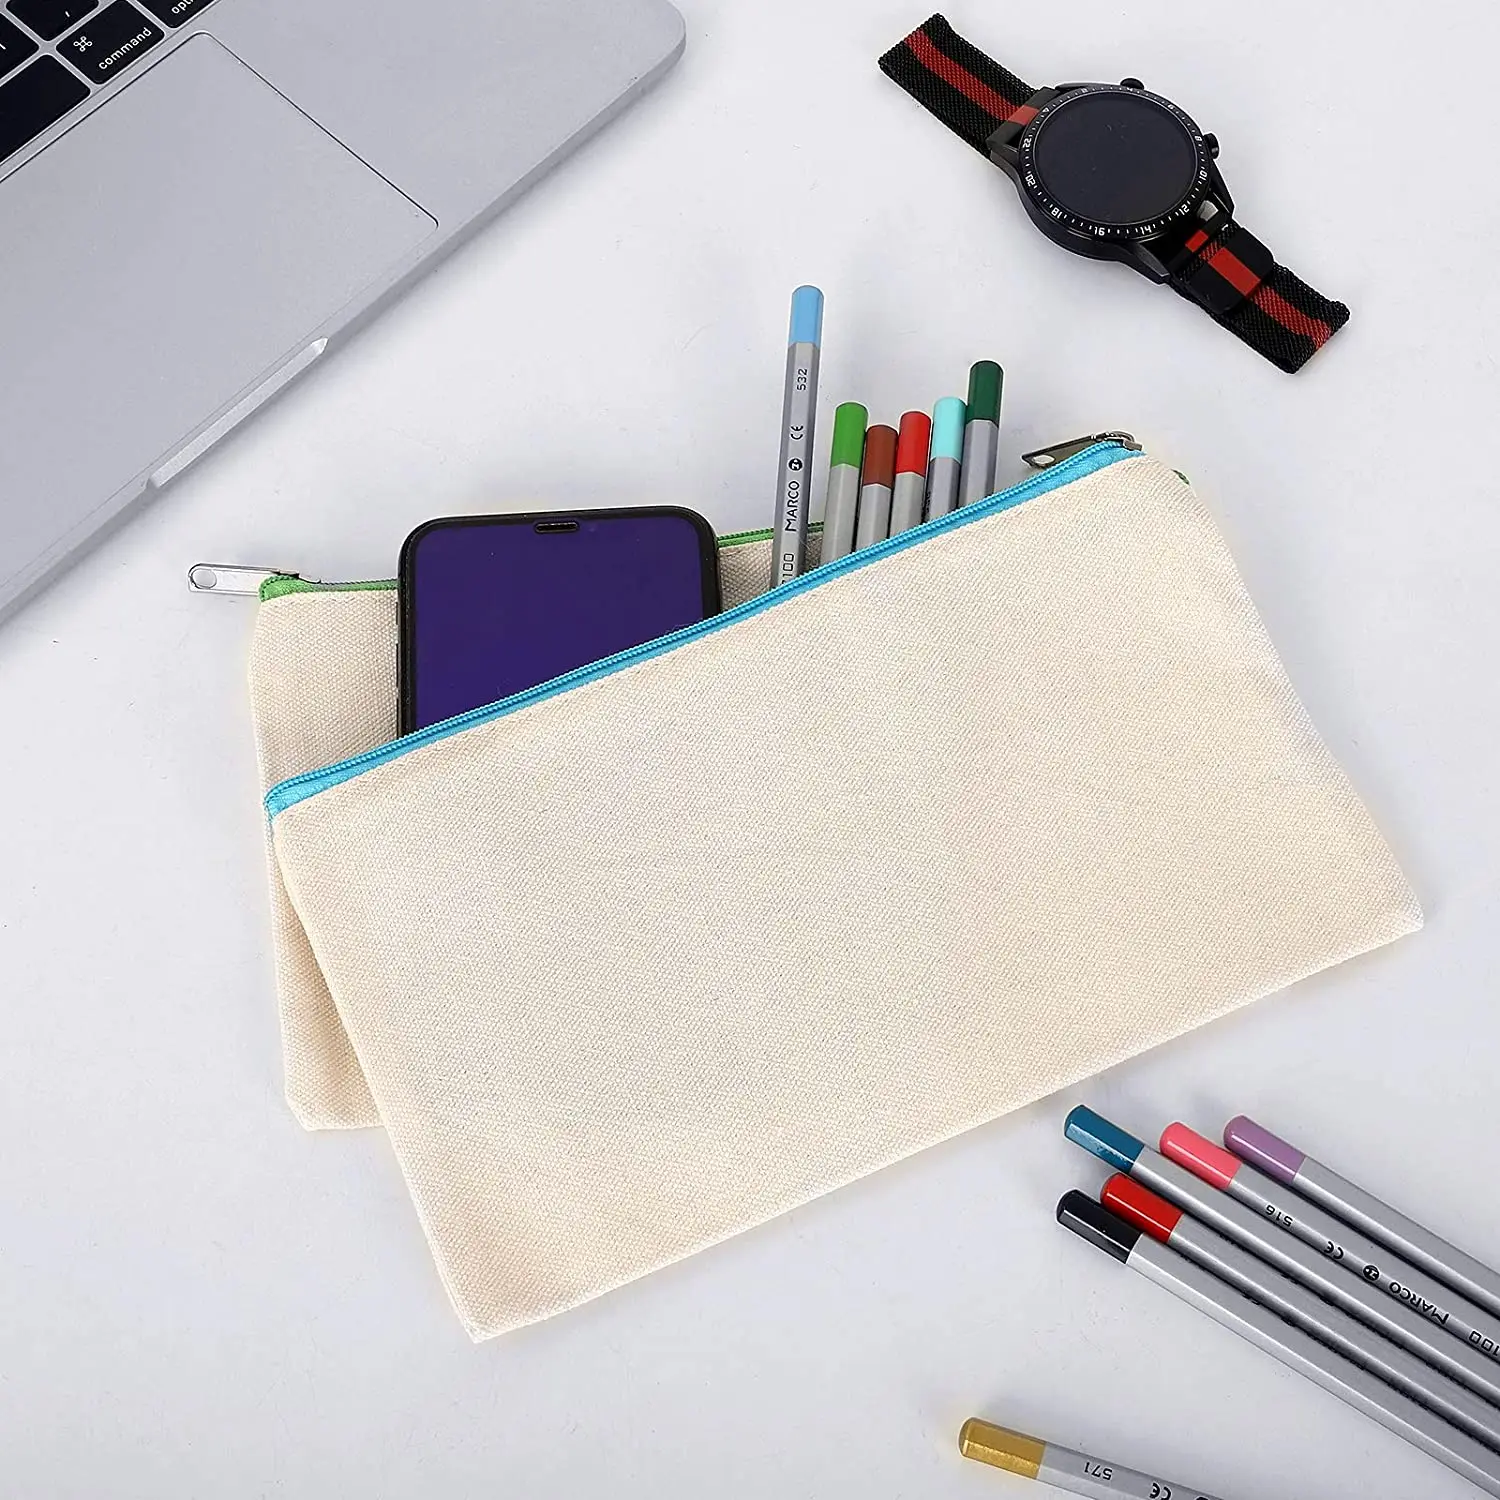 100pcs bag Cotton Canvas Makeup Bag, Multipurpose Cosmetic Bag with Zipper Travel Toiletry Pouch, Blank DIY Craft Bag Pencil bag